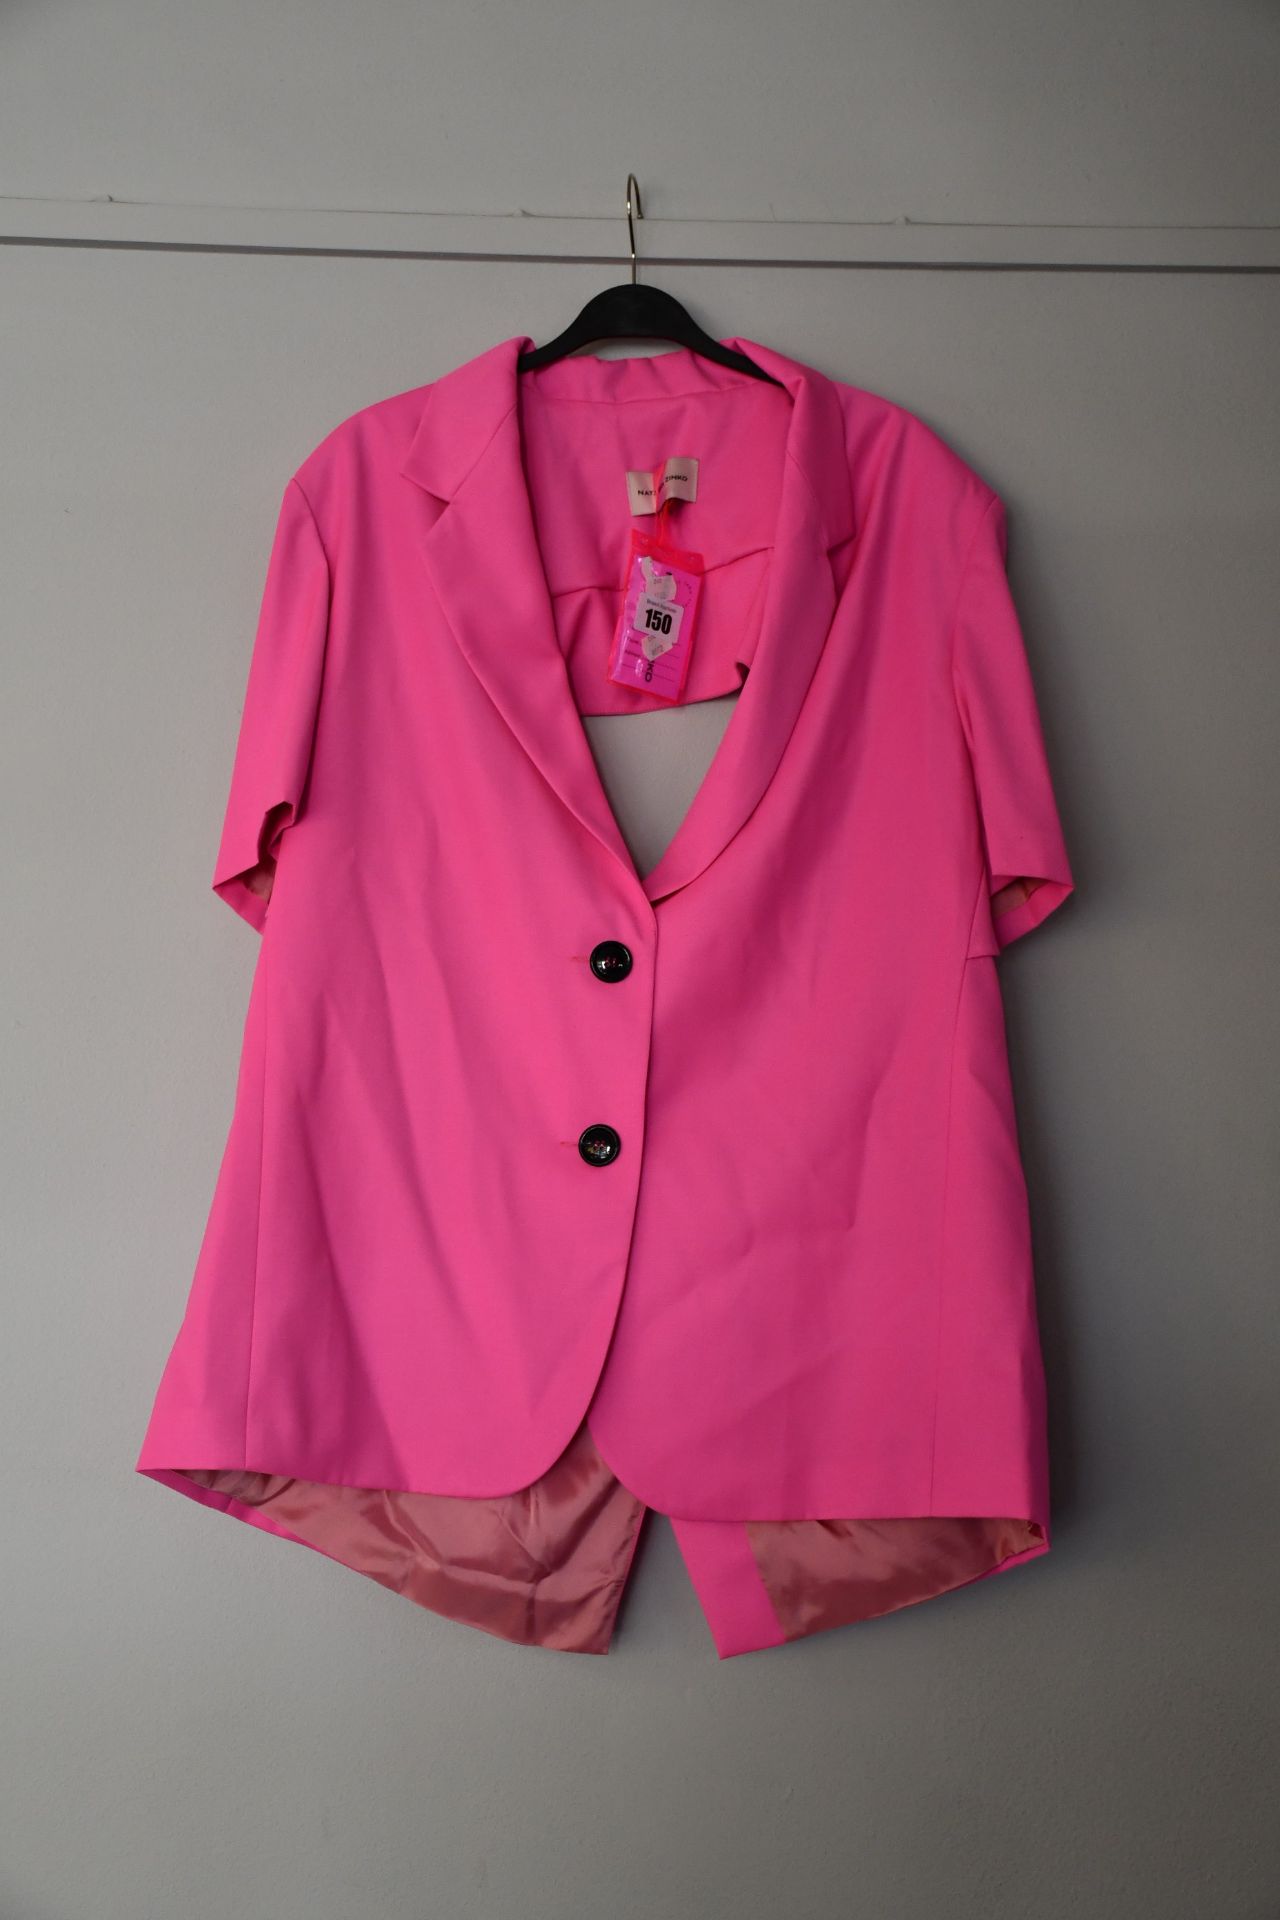 An as new Natasha Zinko slim fit pink short sleeve jacket (Size 34 - RRP £567).